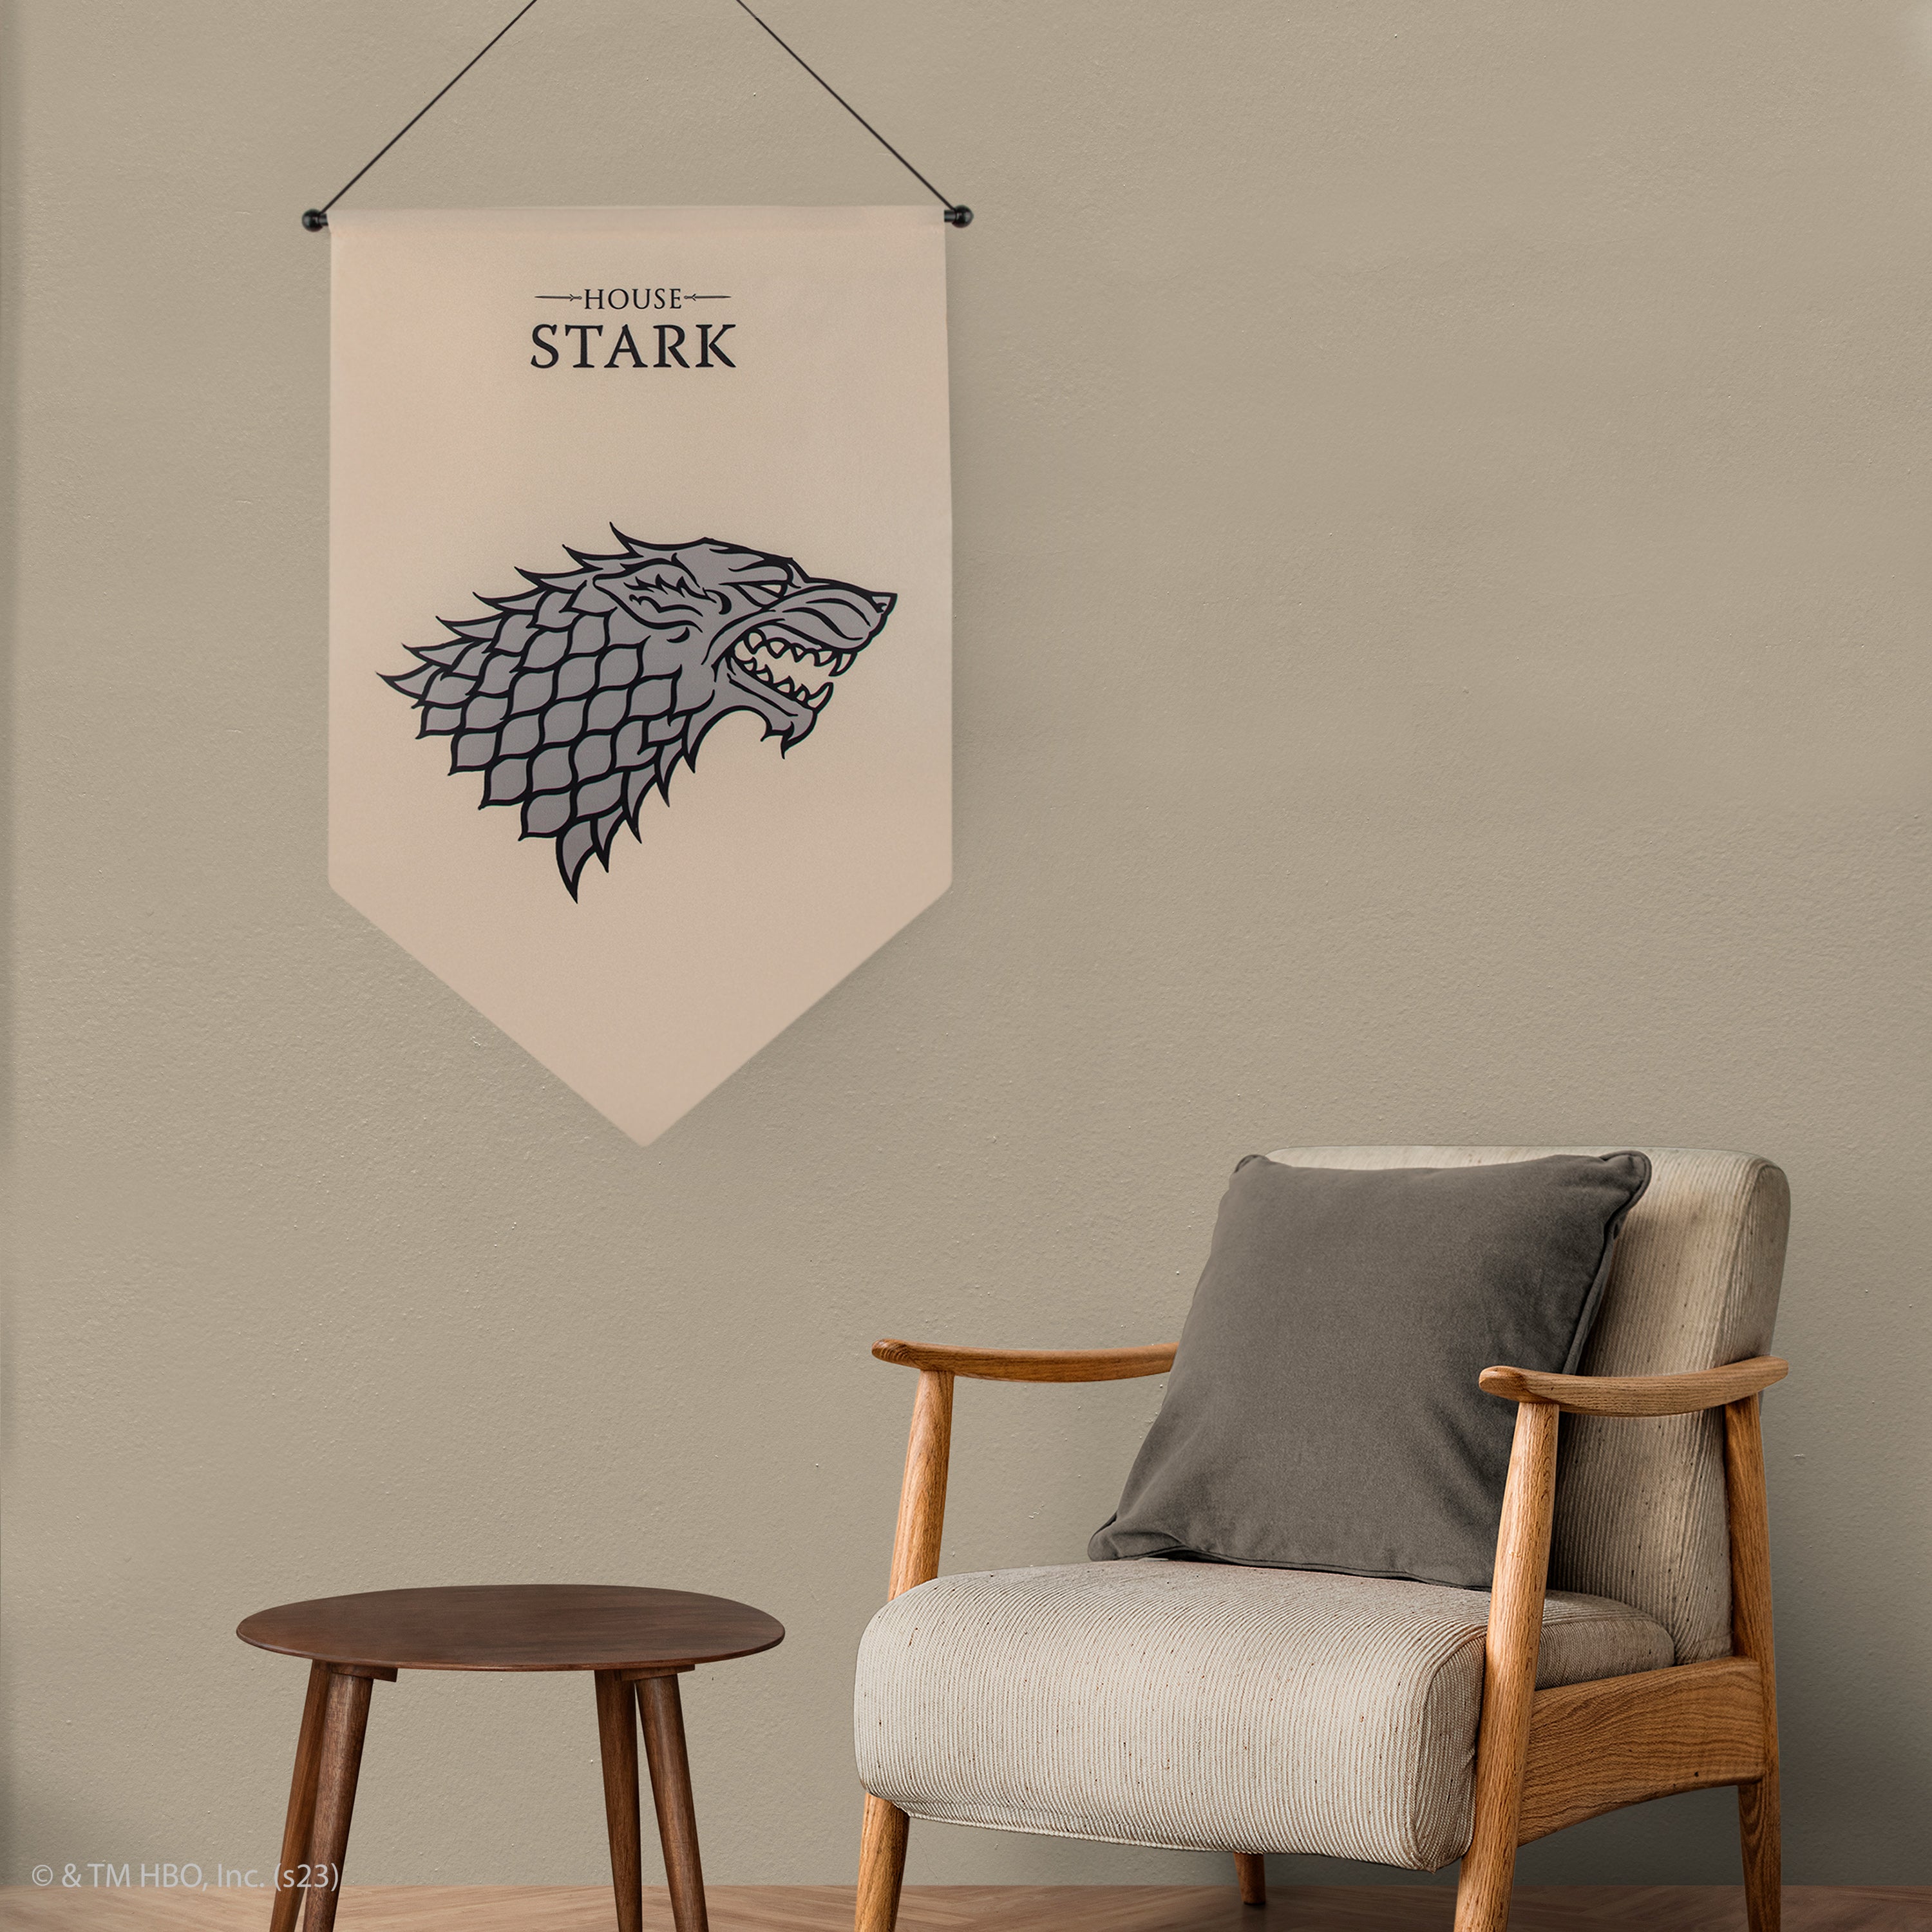 Free: Game of Thrones Stark, Game of Thrones House Stark logo